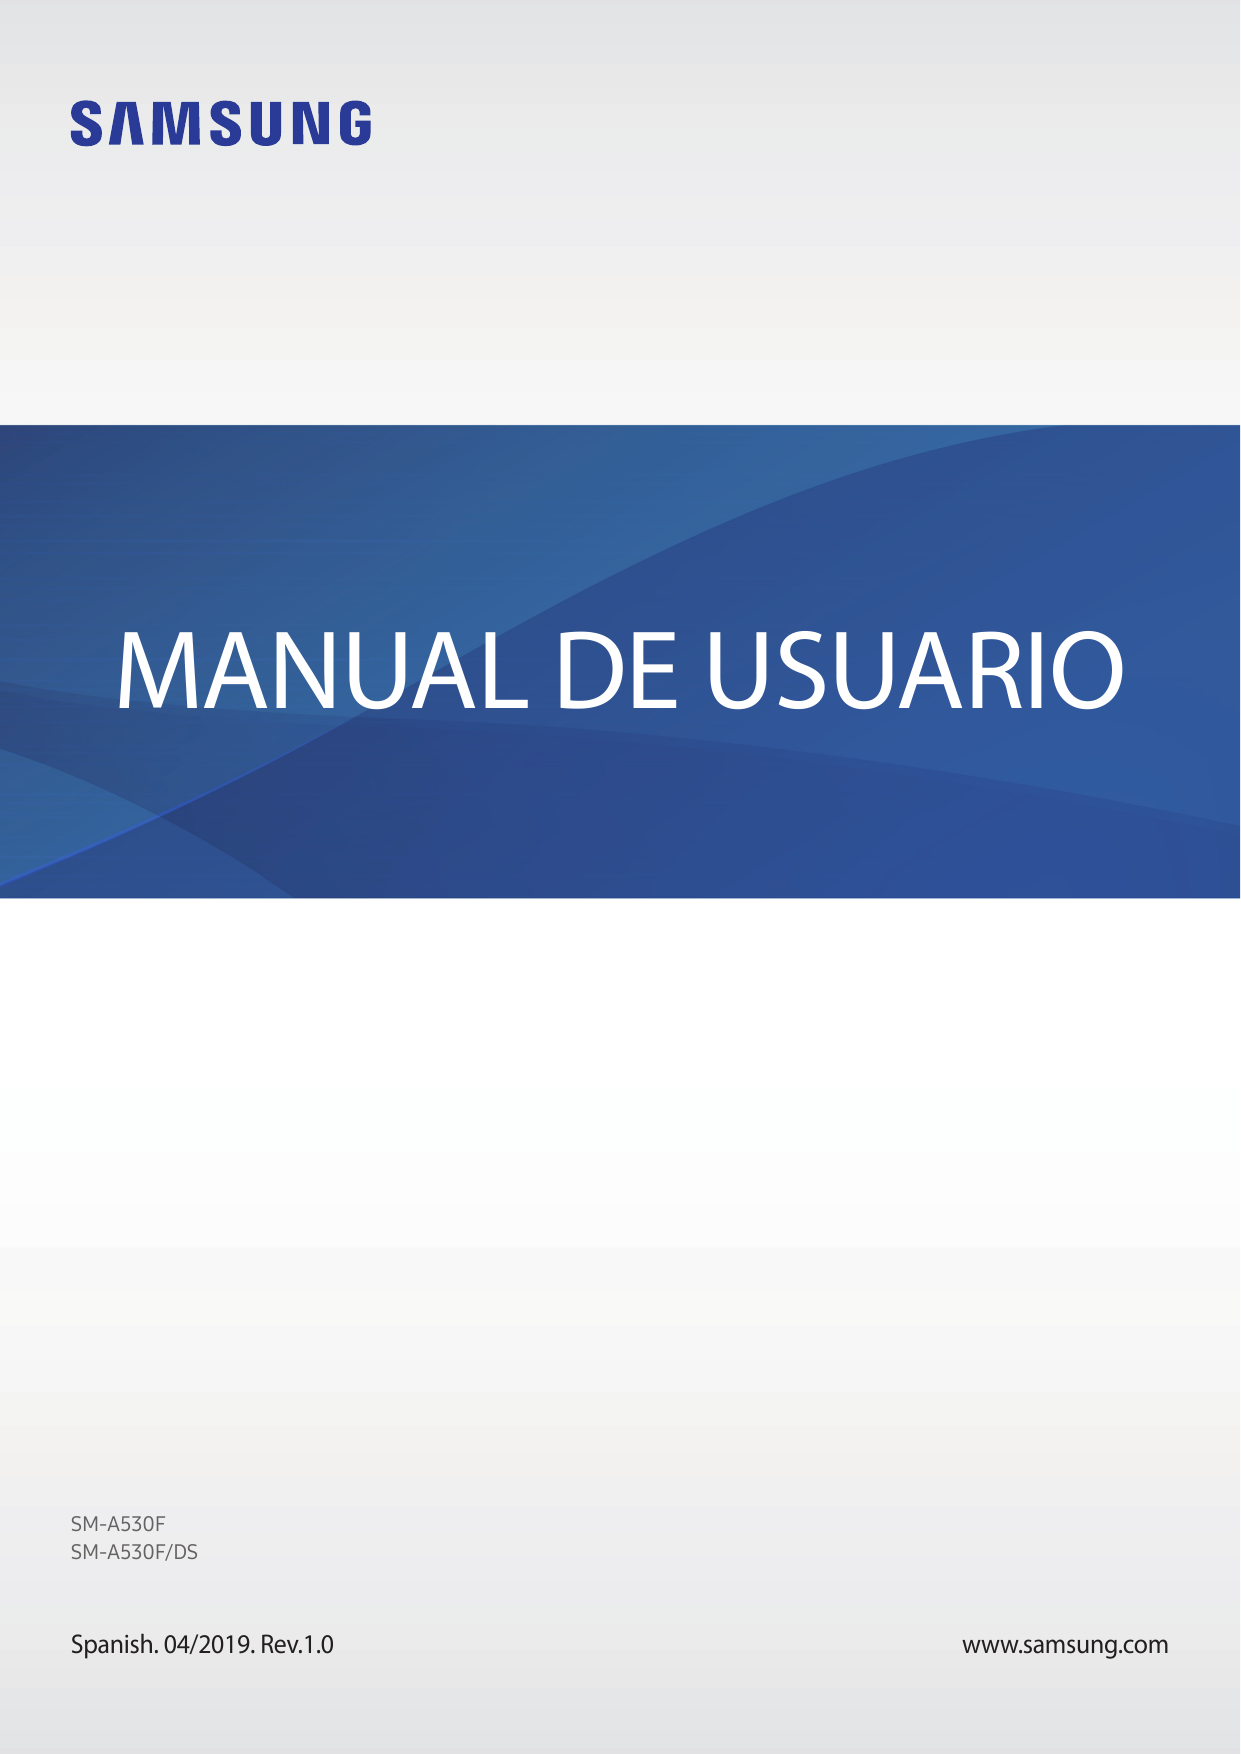 MANUAL DE USUARIOSM-A530FSM-A530F/DSSpanish. 04/2019. Rev.1.0www.samsung.com